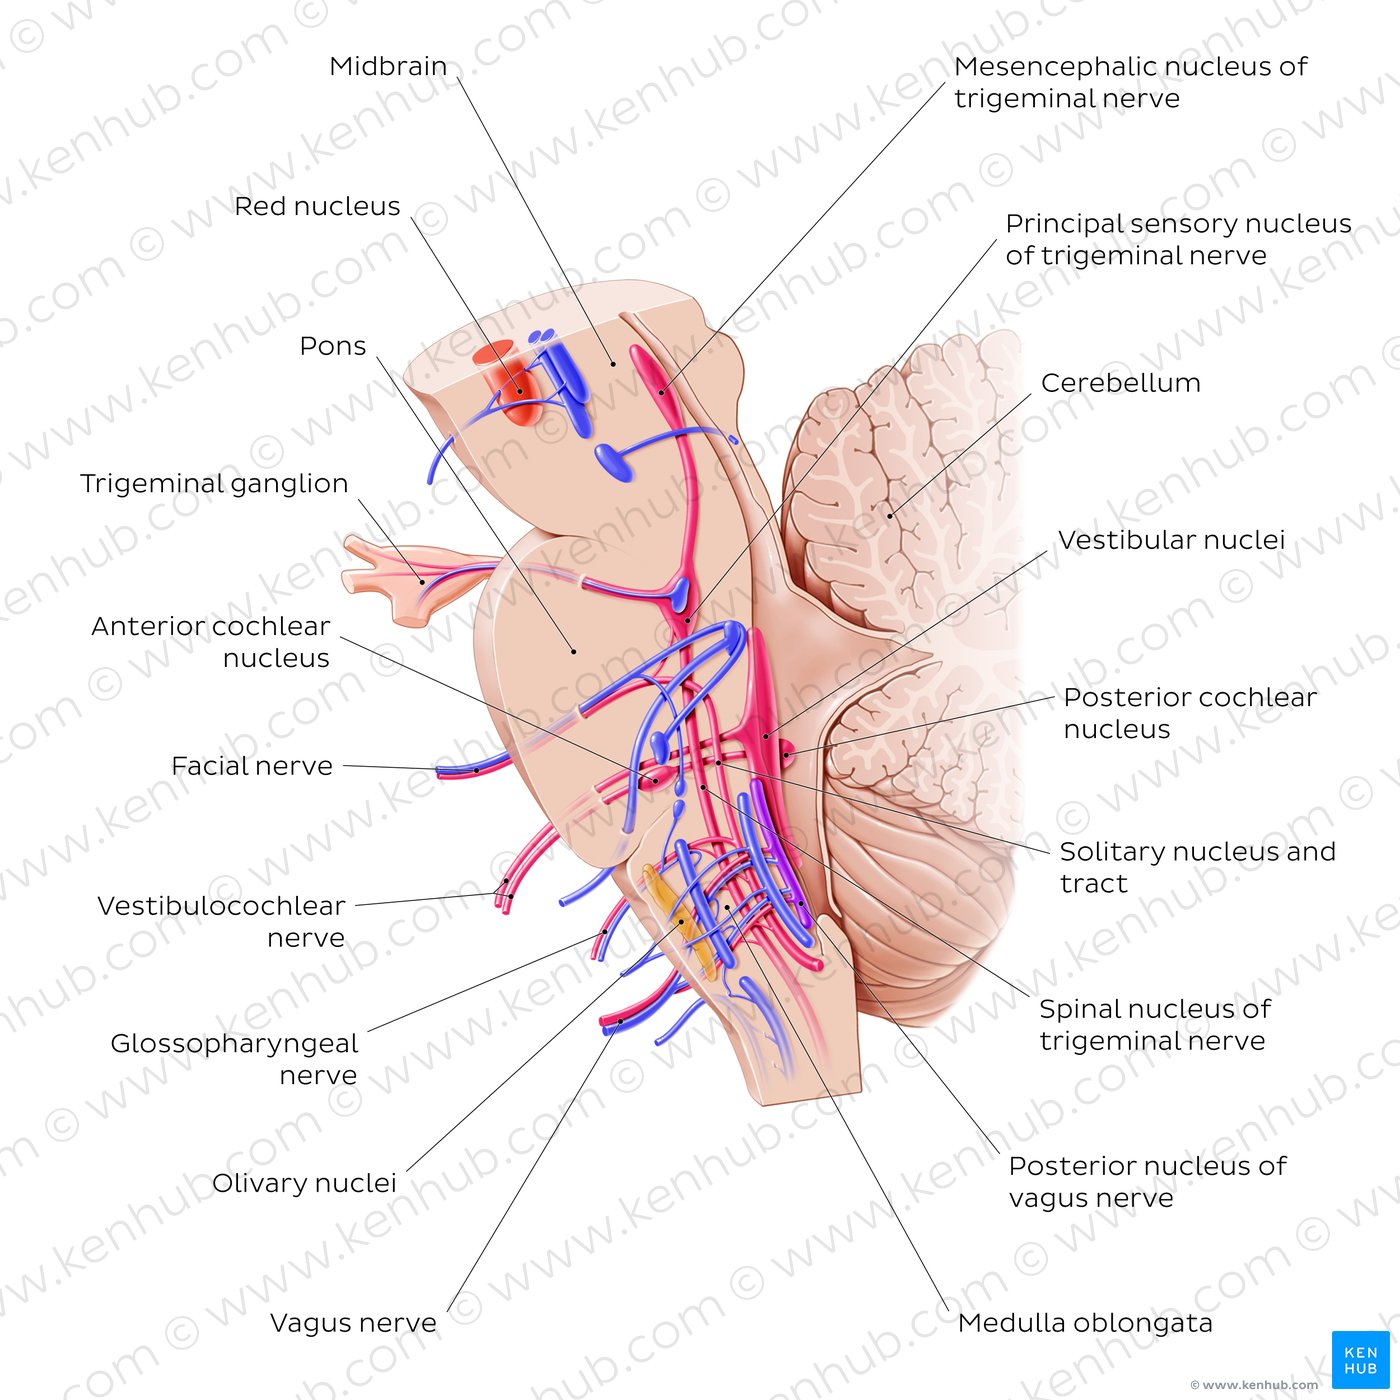 Cranial nerve nuclei - sagittal view (afferent)